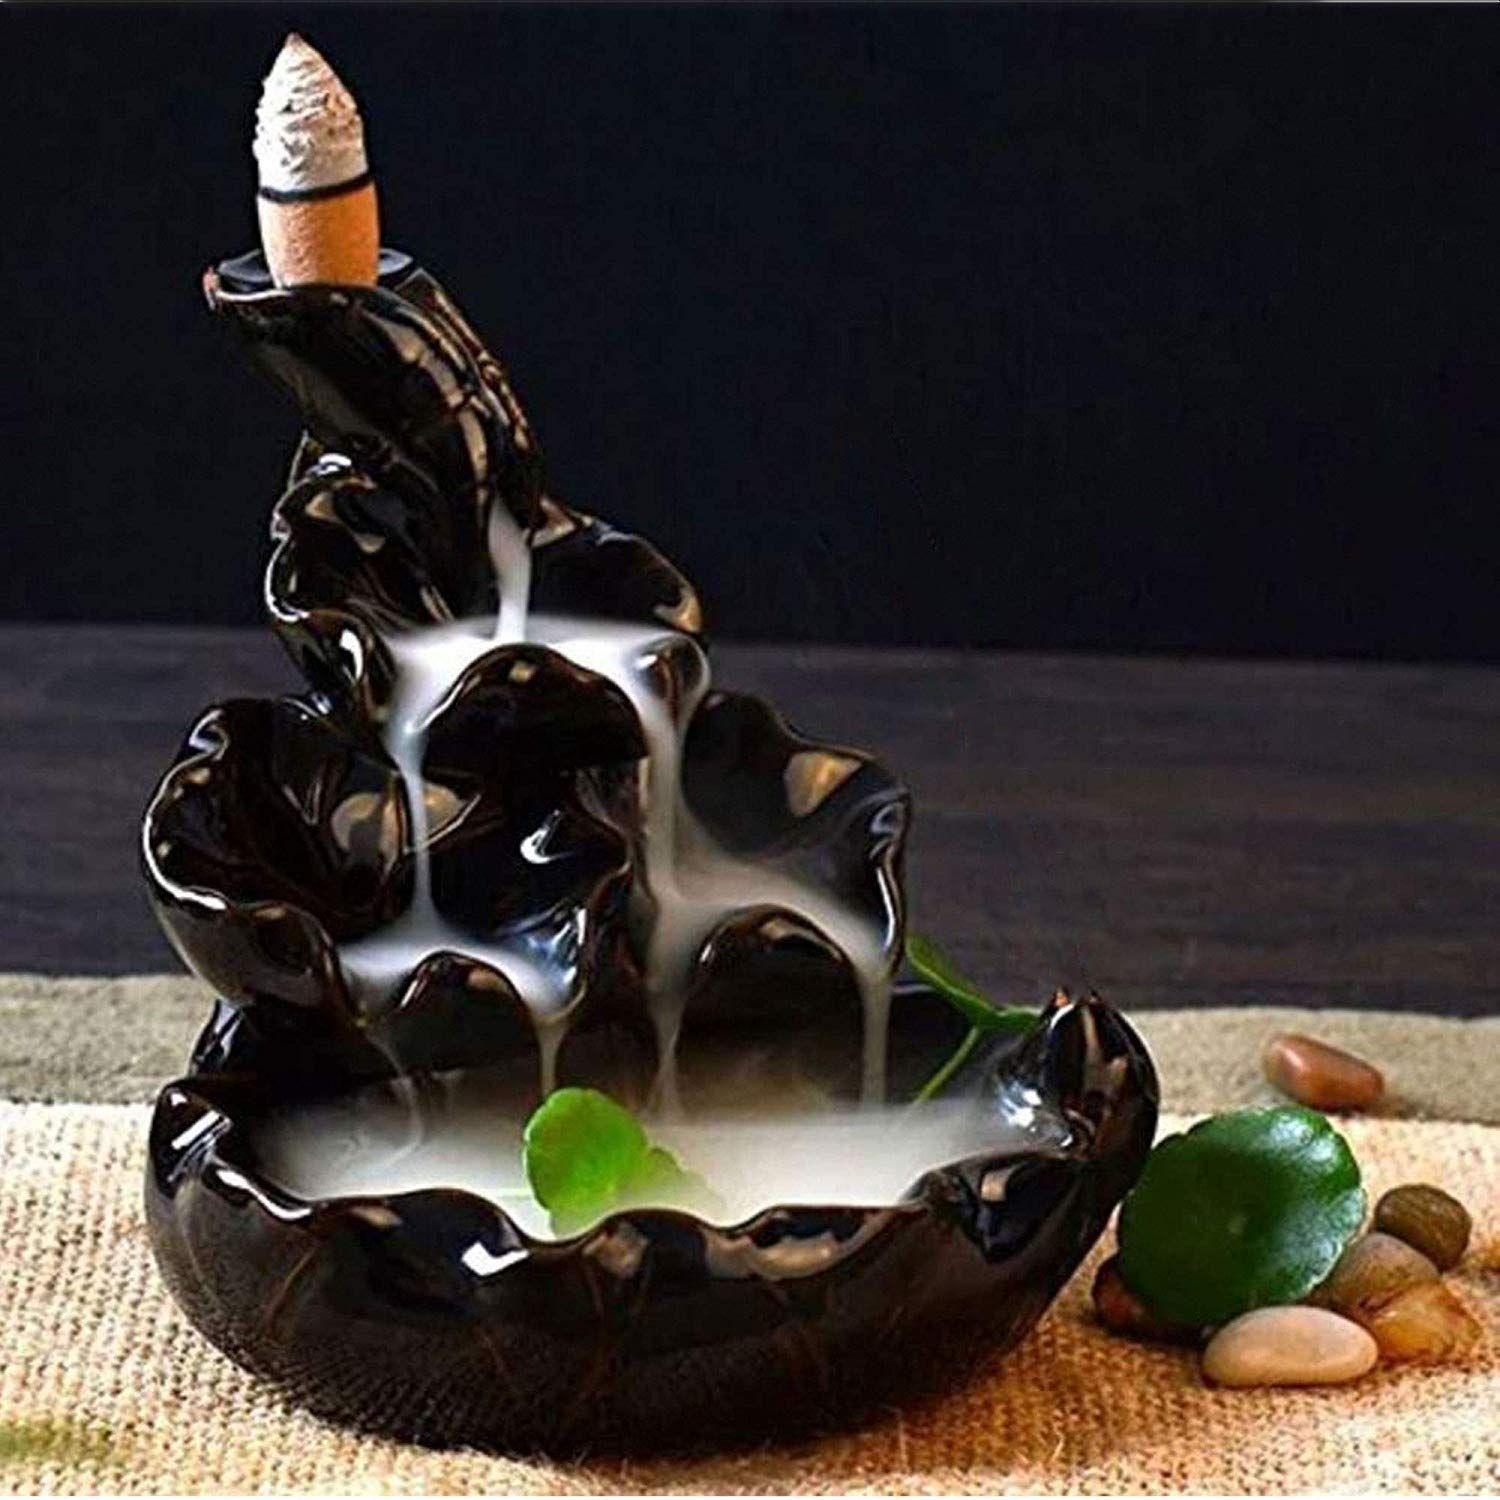 This ceramic incense burner that dispenses smoke like a fountain